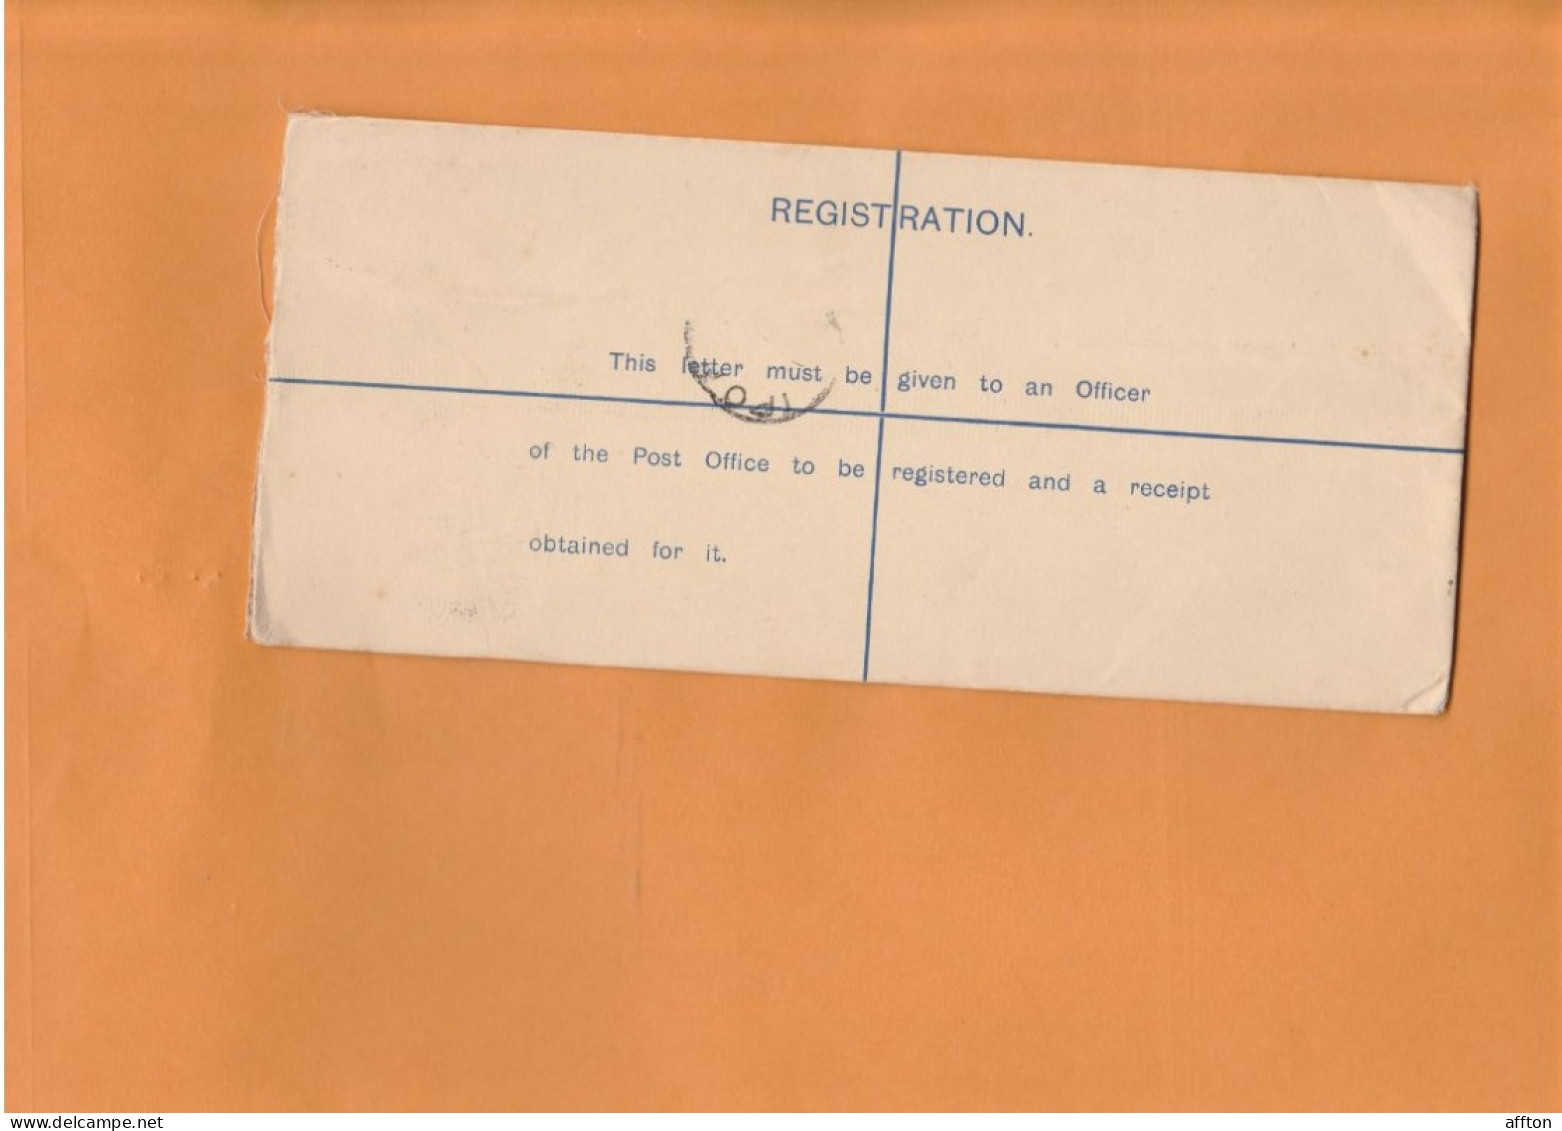 Kuala Kangsar Malaysia 1954 Registered Cover Mailed - Federated Malay States